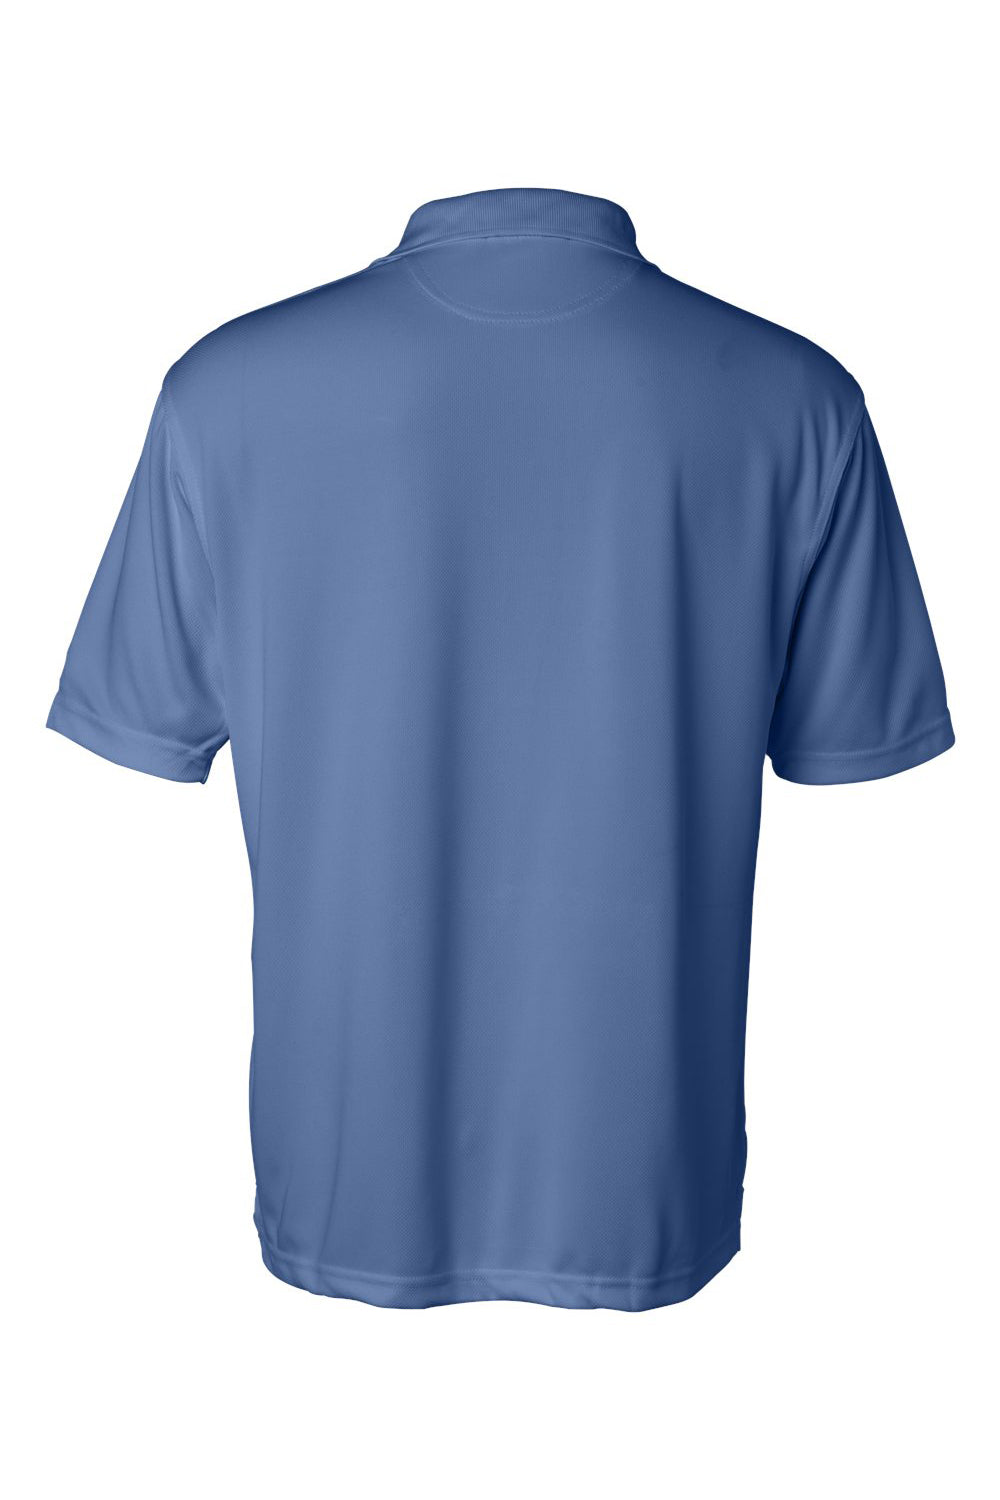 Sierra Pacific 0469 Mens Moisture Wish Mesh Short Sleeve Polo Shirt Blueberry Flat Back